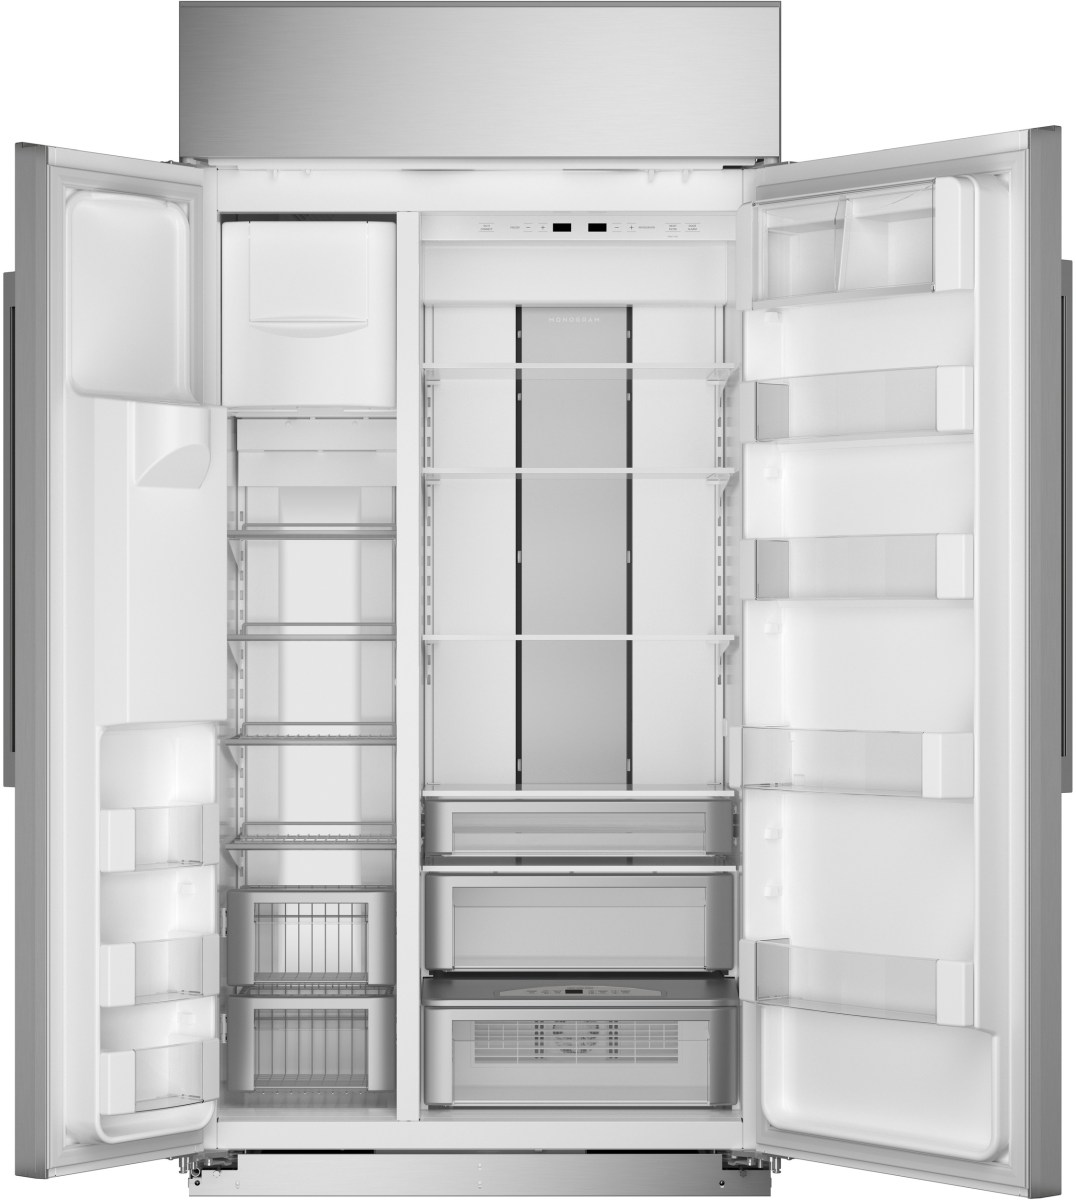 Monogram 20.2 Cu. Ft. Custom Panel Smart Built In Side-by-Side Refrigerator